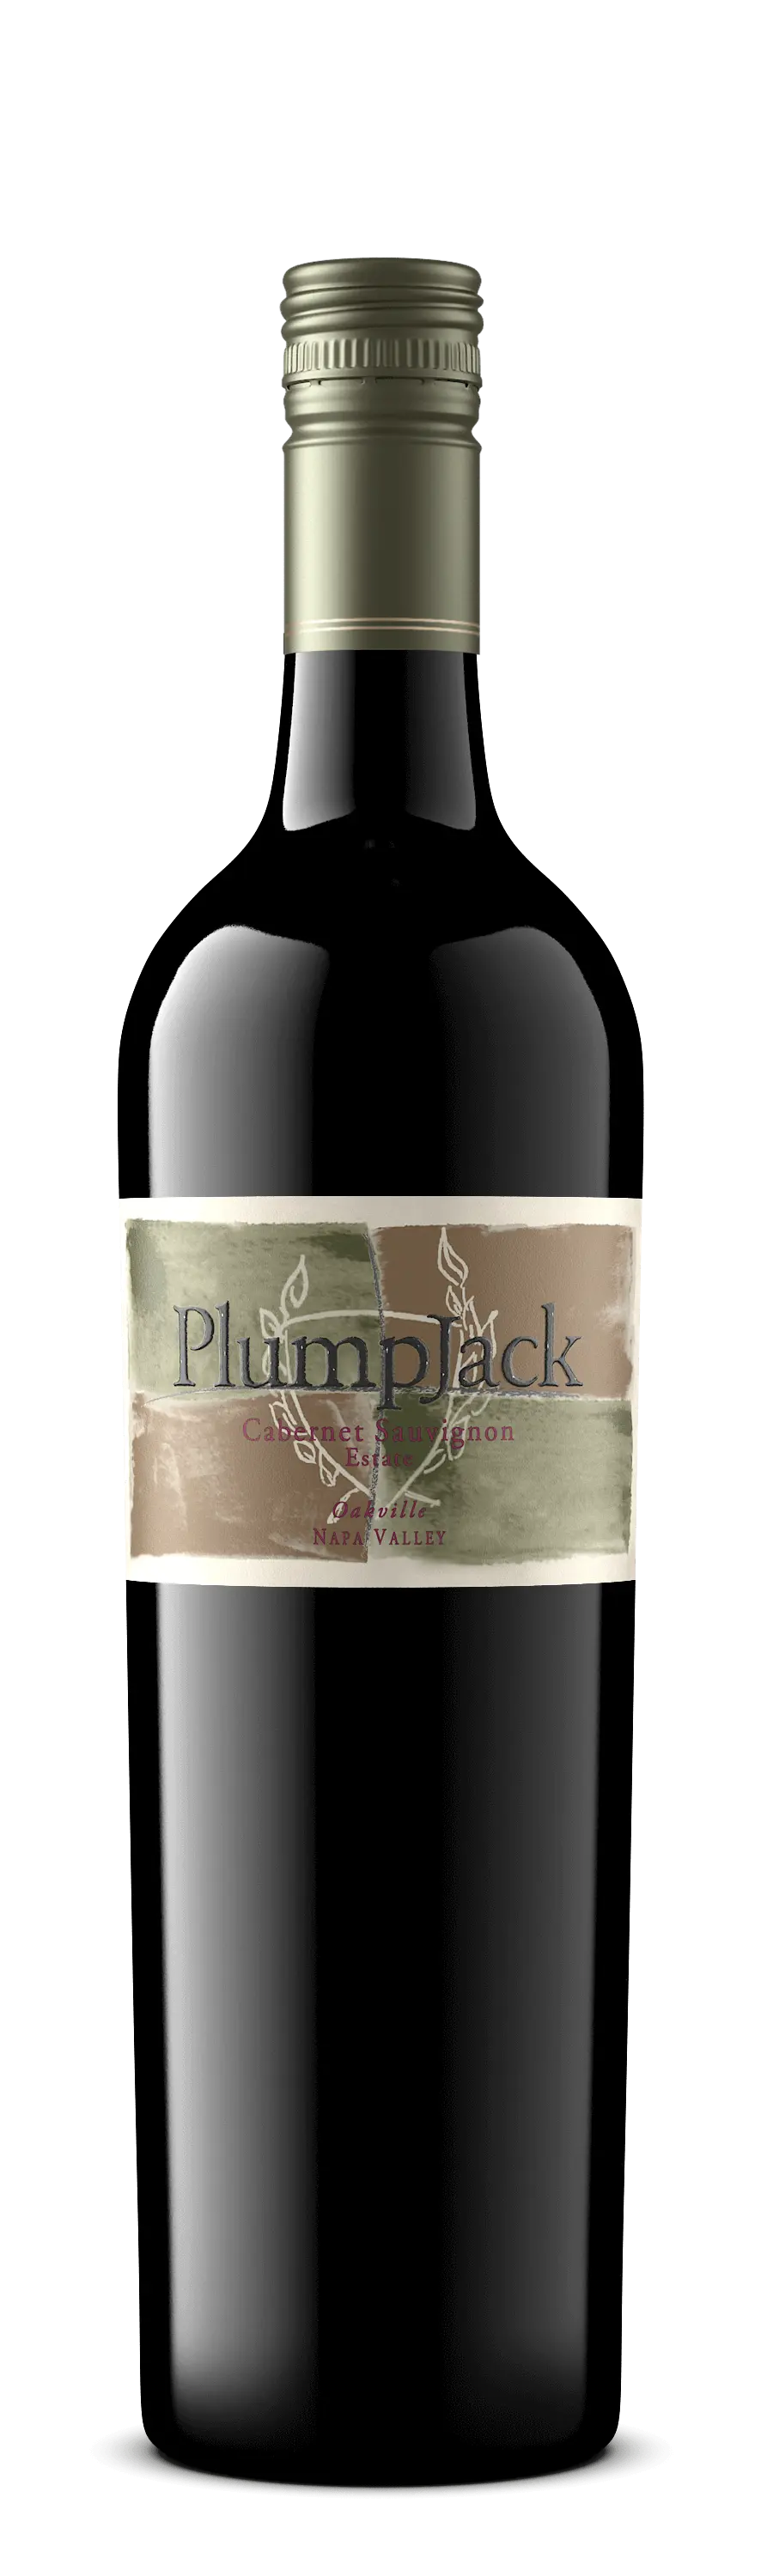 Plumpjack 2019 'Reserve' Cabernet Sauvignon, Napa Valley